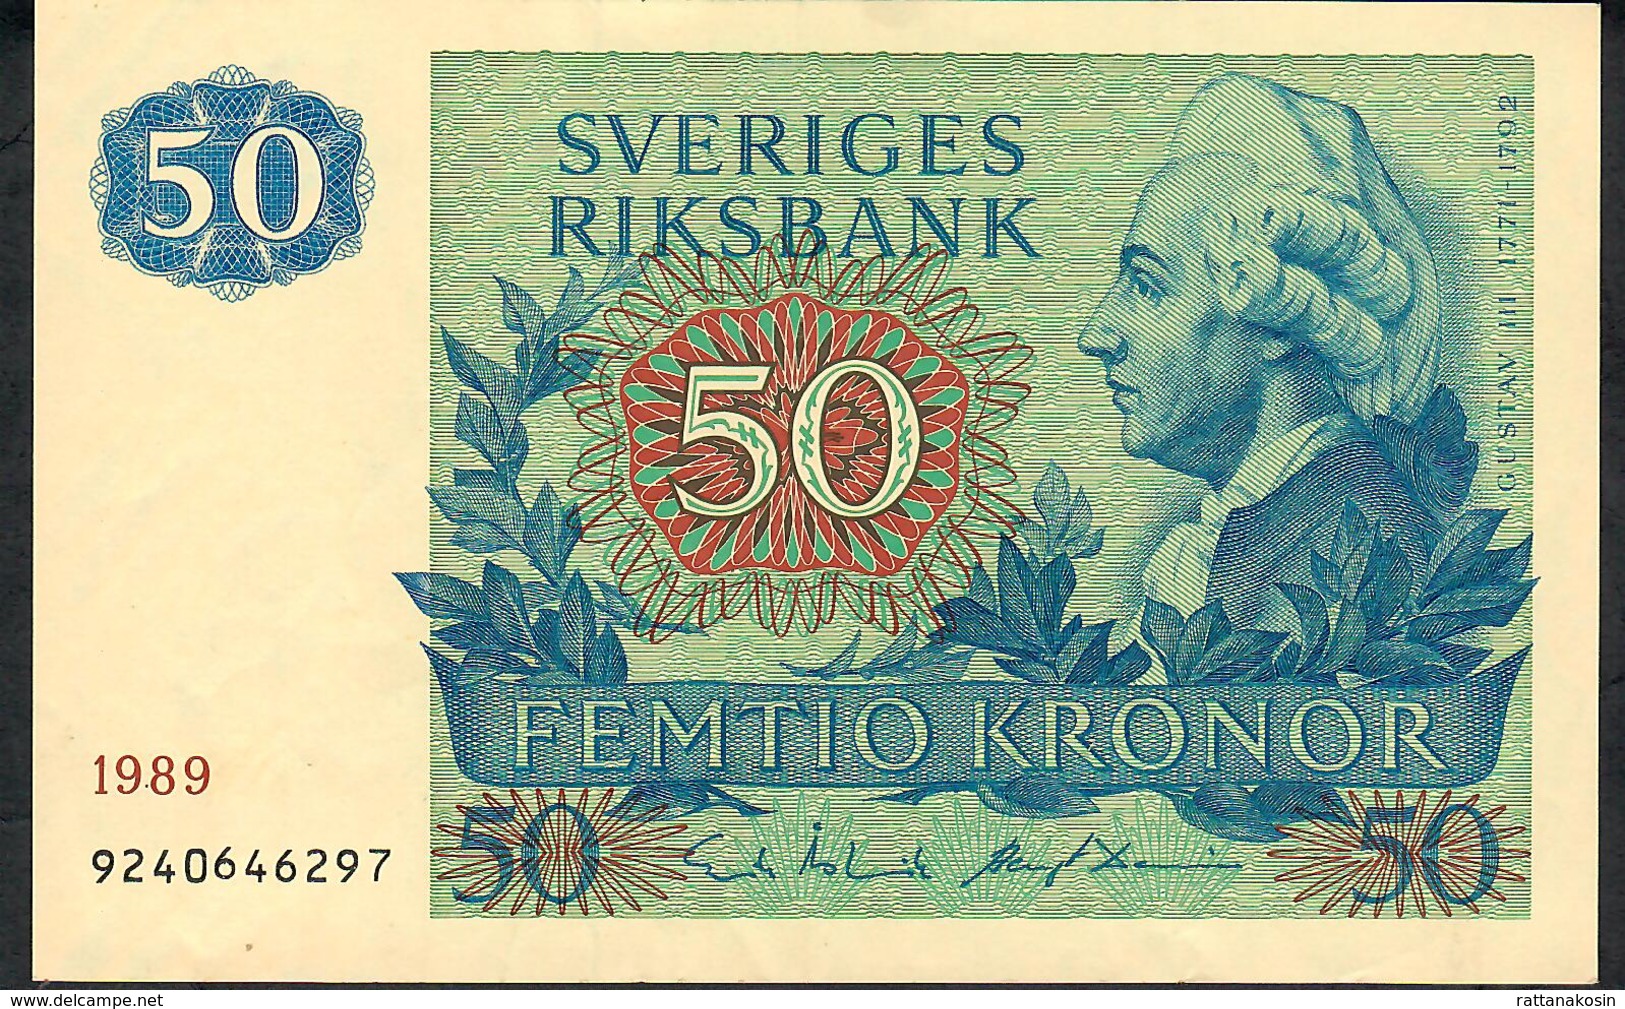 SWEDEN P53d 50 KRONOR 1989 #9240646297  XF - Sweden